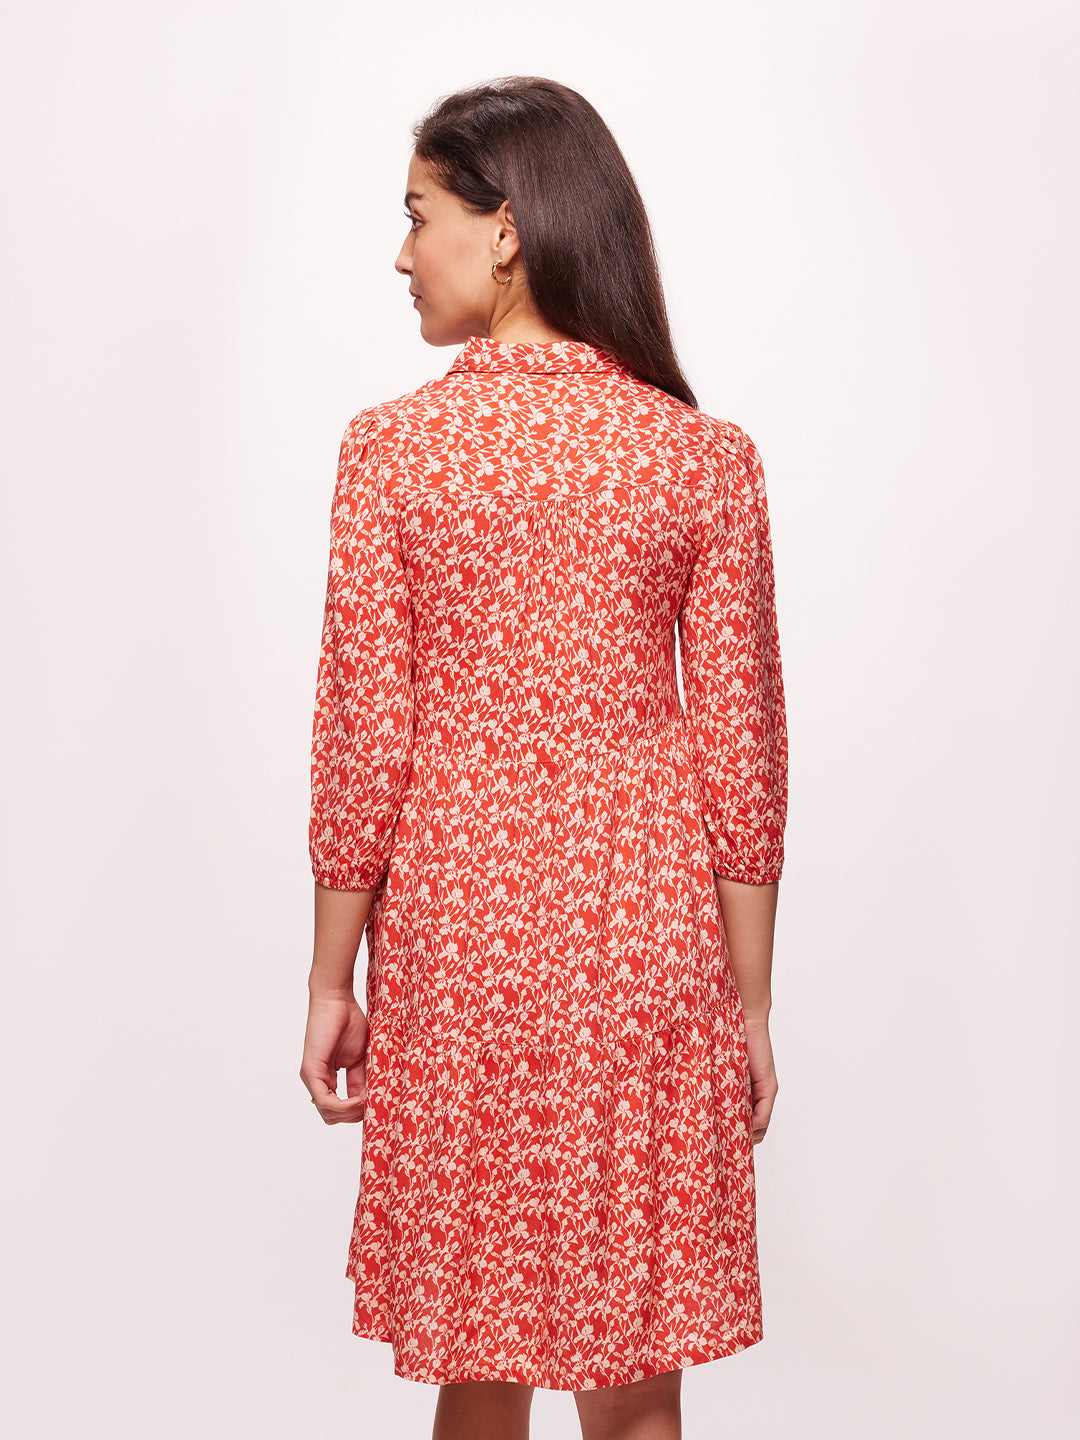 Bombay High Women's Vermilion Orange Floral Print Short Length Tiered Dress